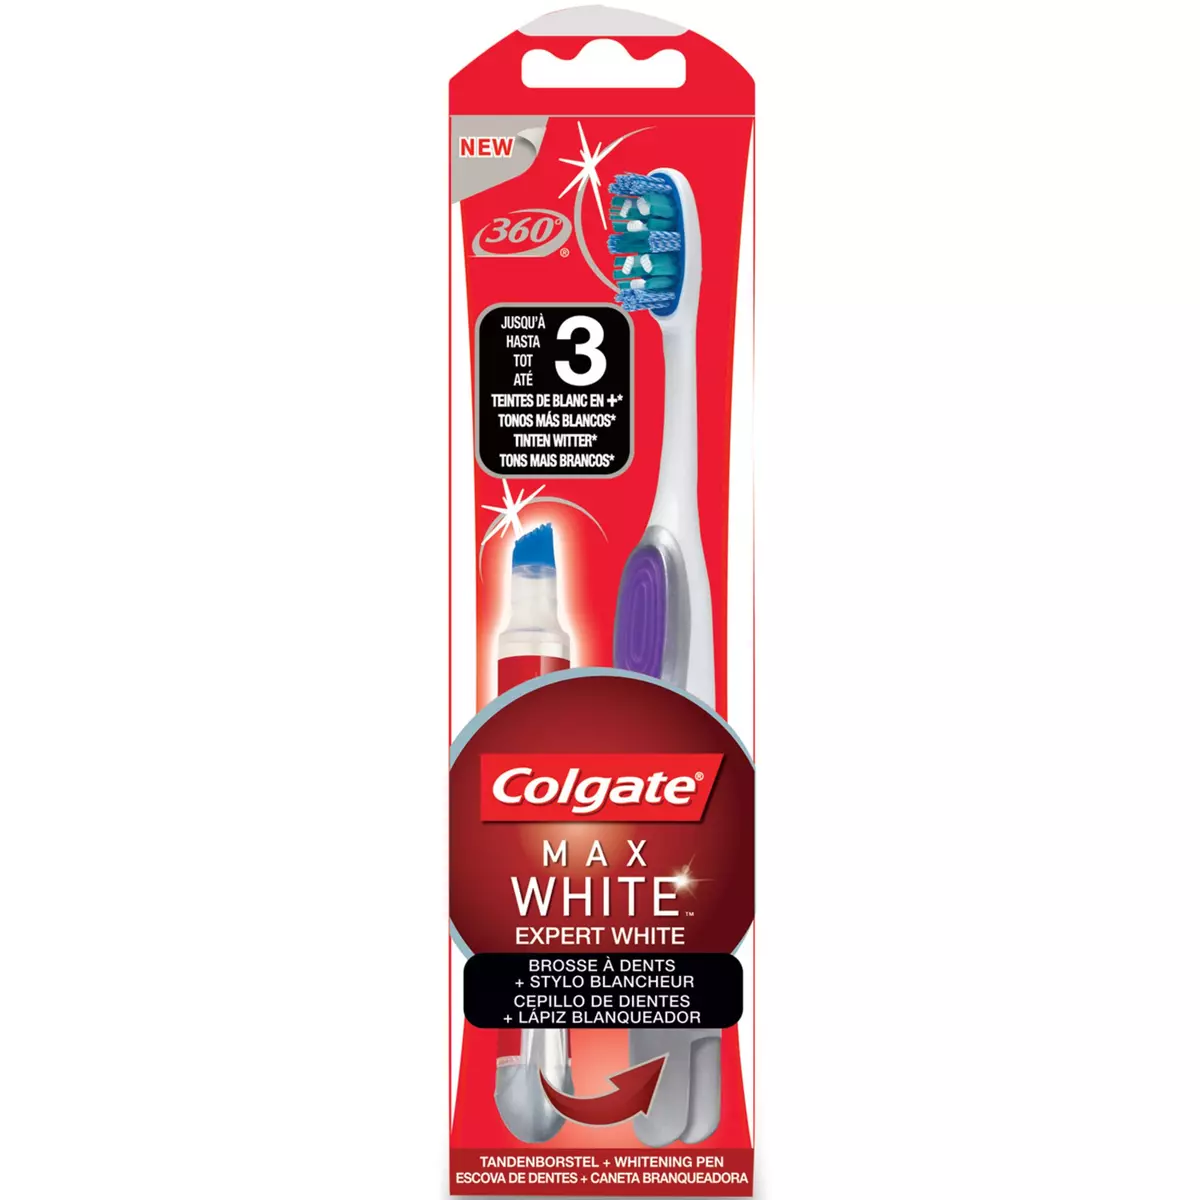 COLGATE Max White brosse à dents + stylo blancheur 1 stylo 1 brosse + 1 stylo